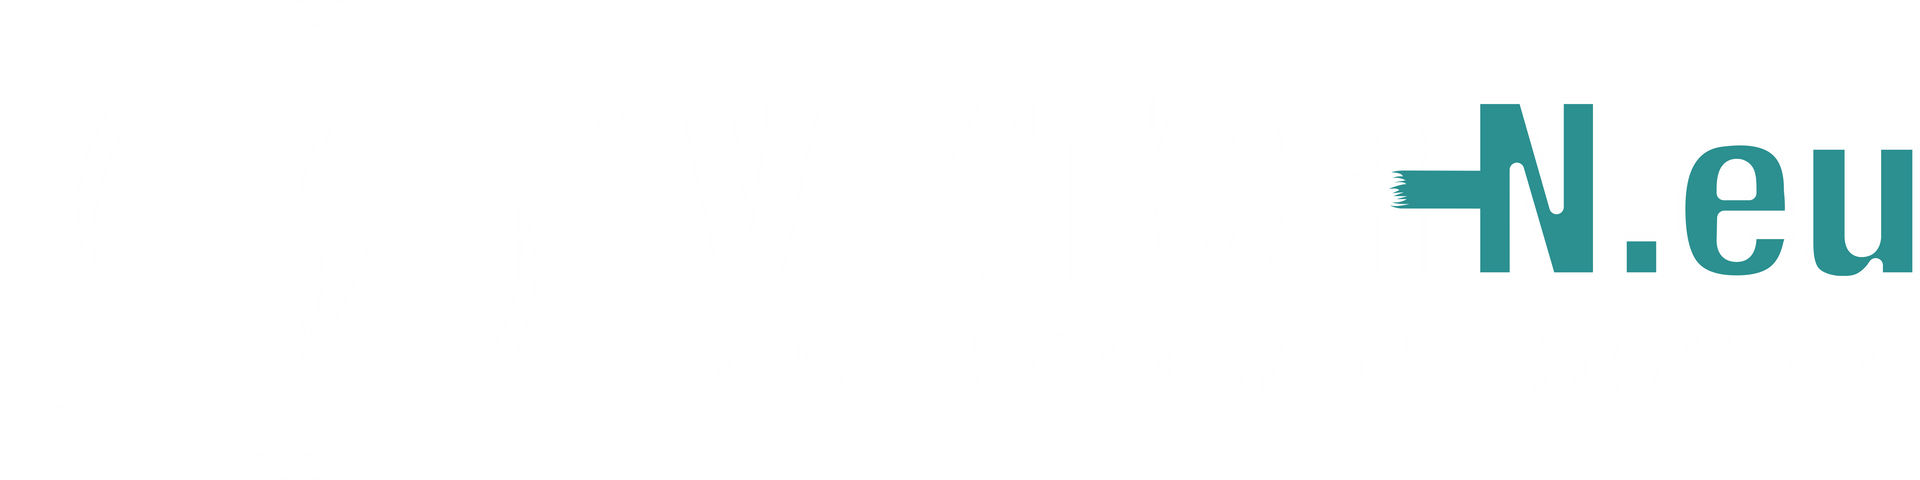 Logo Viktor-n.eu